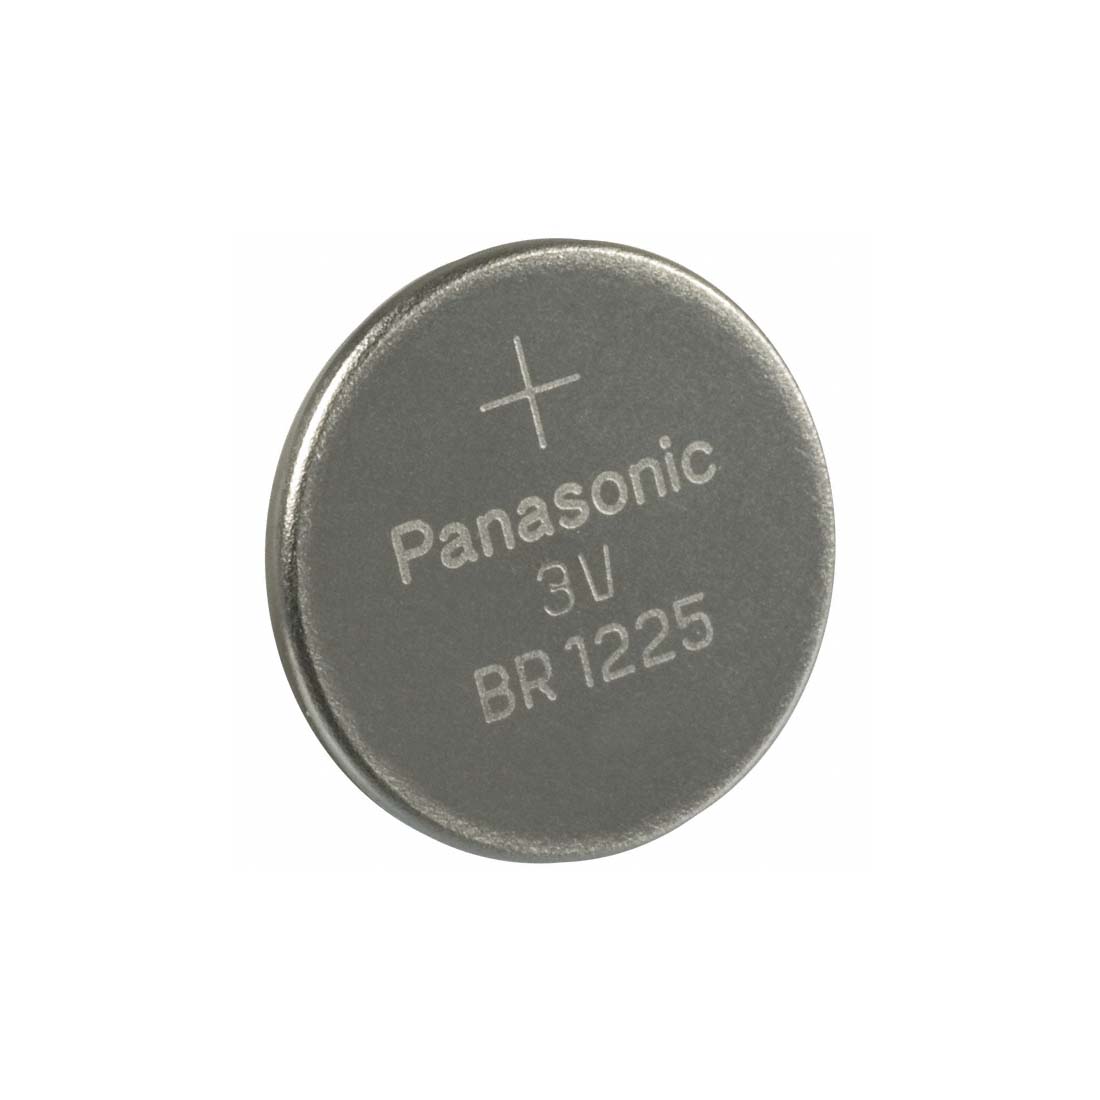 PANASONIC BR 1225